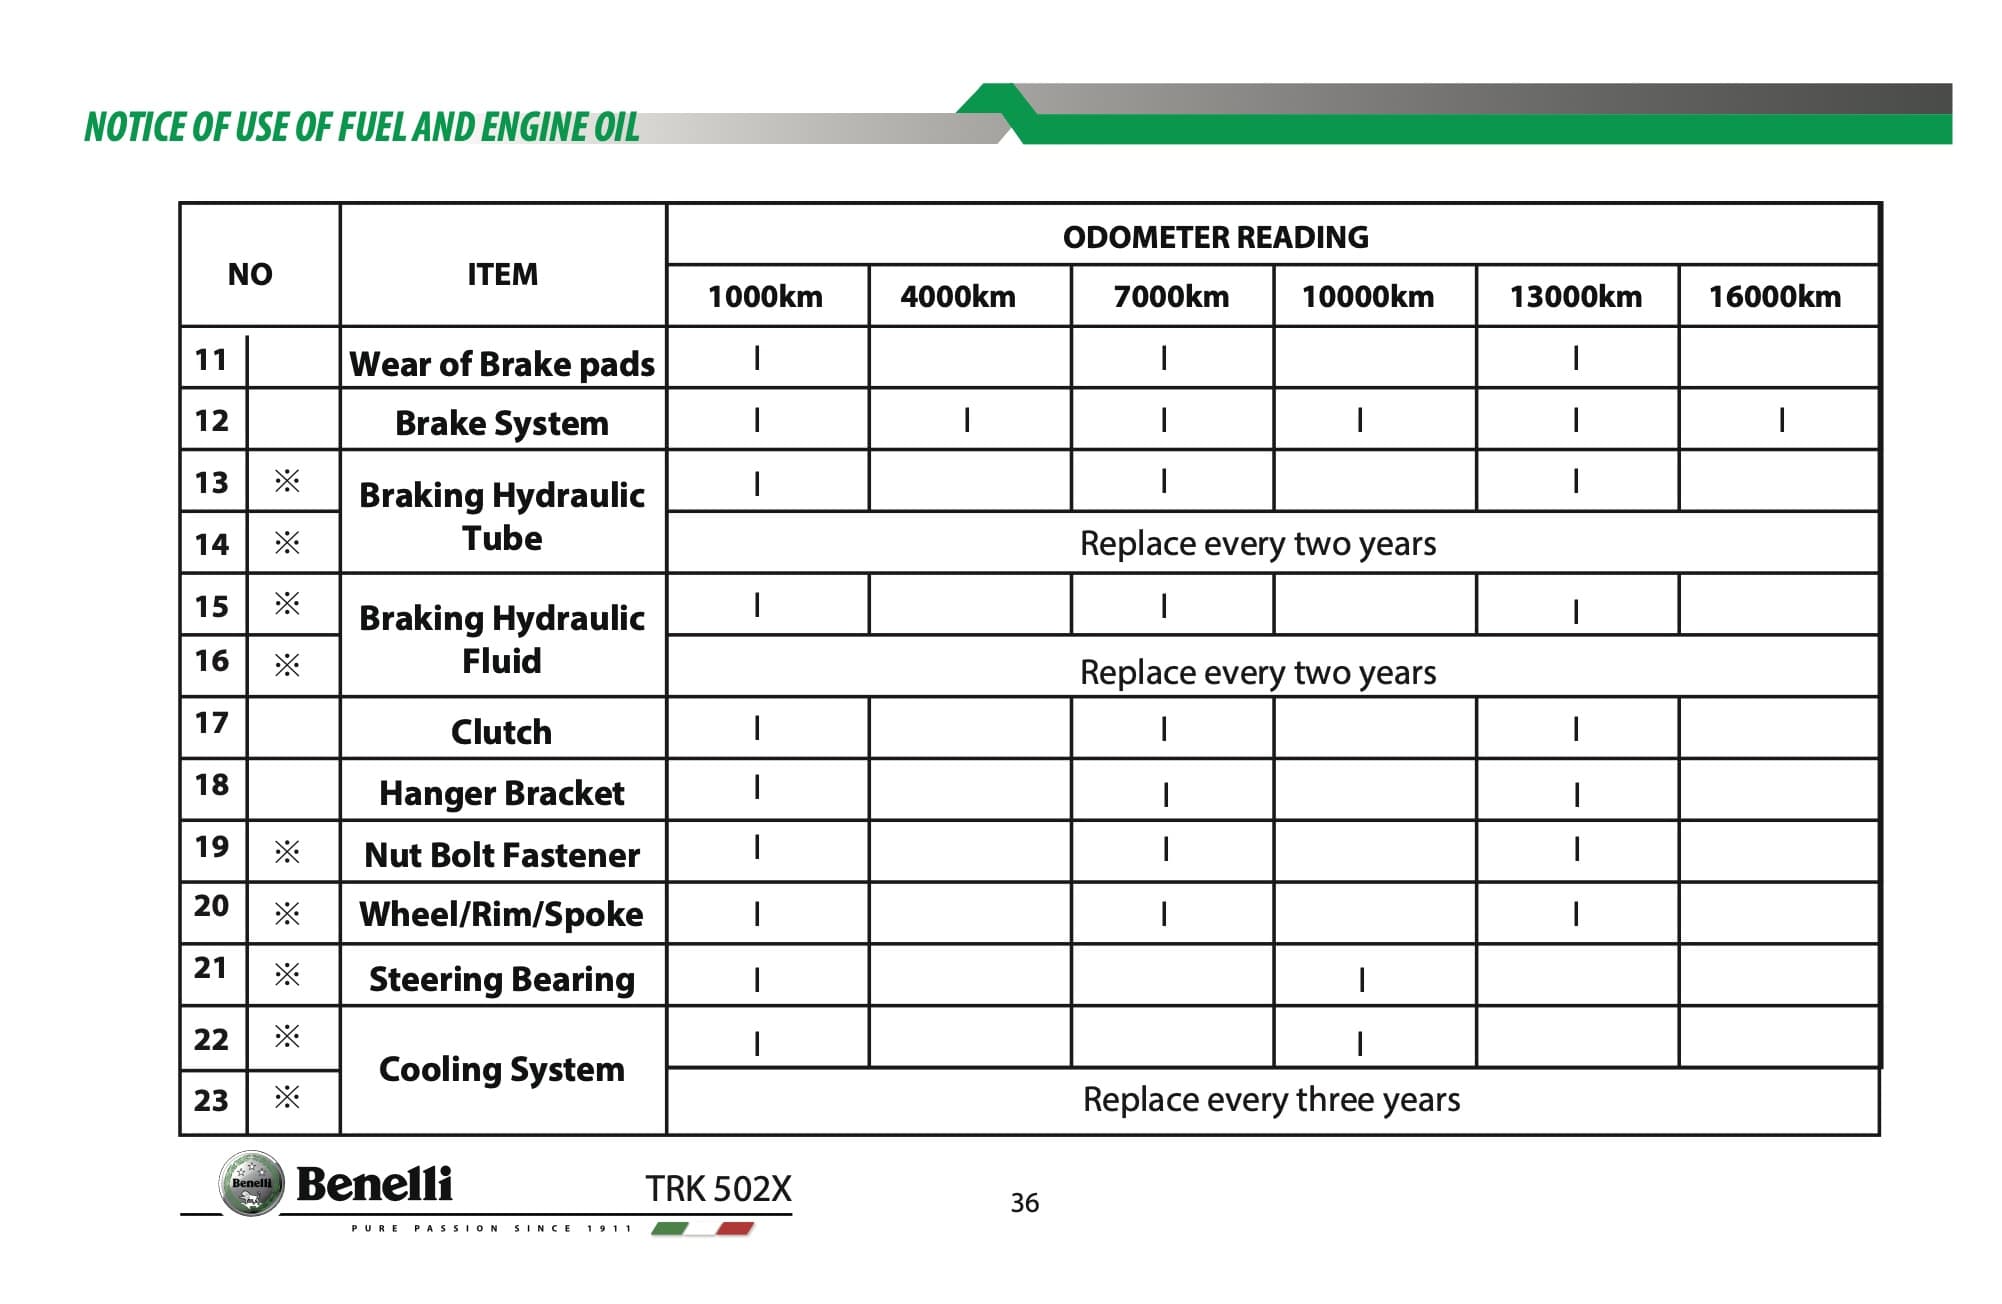 Benelli TRK 502 X manual maintenance schedule screenshot 2